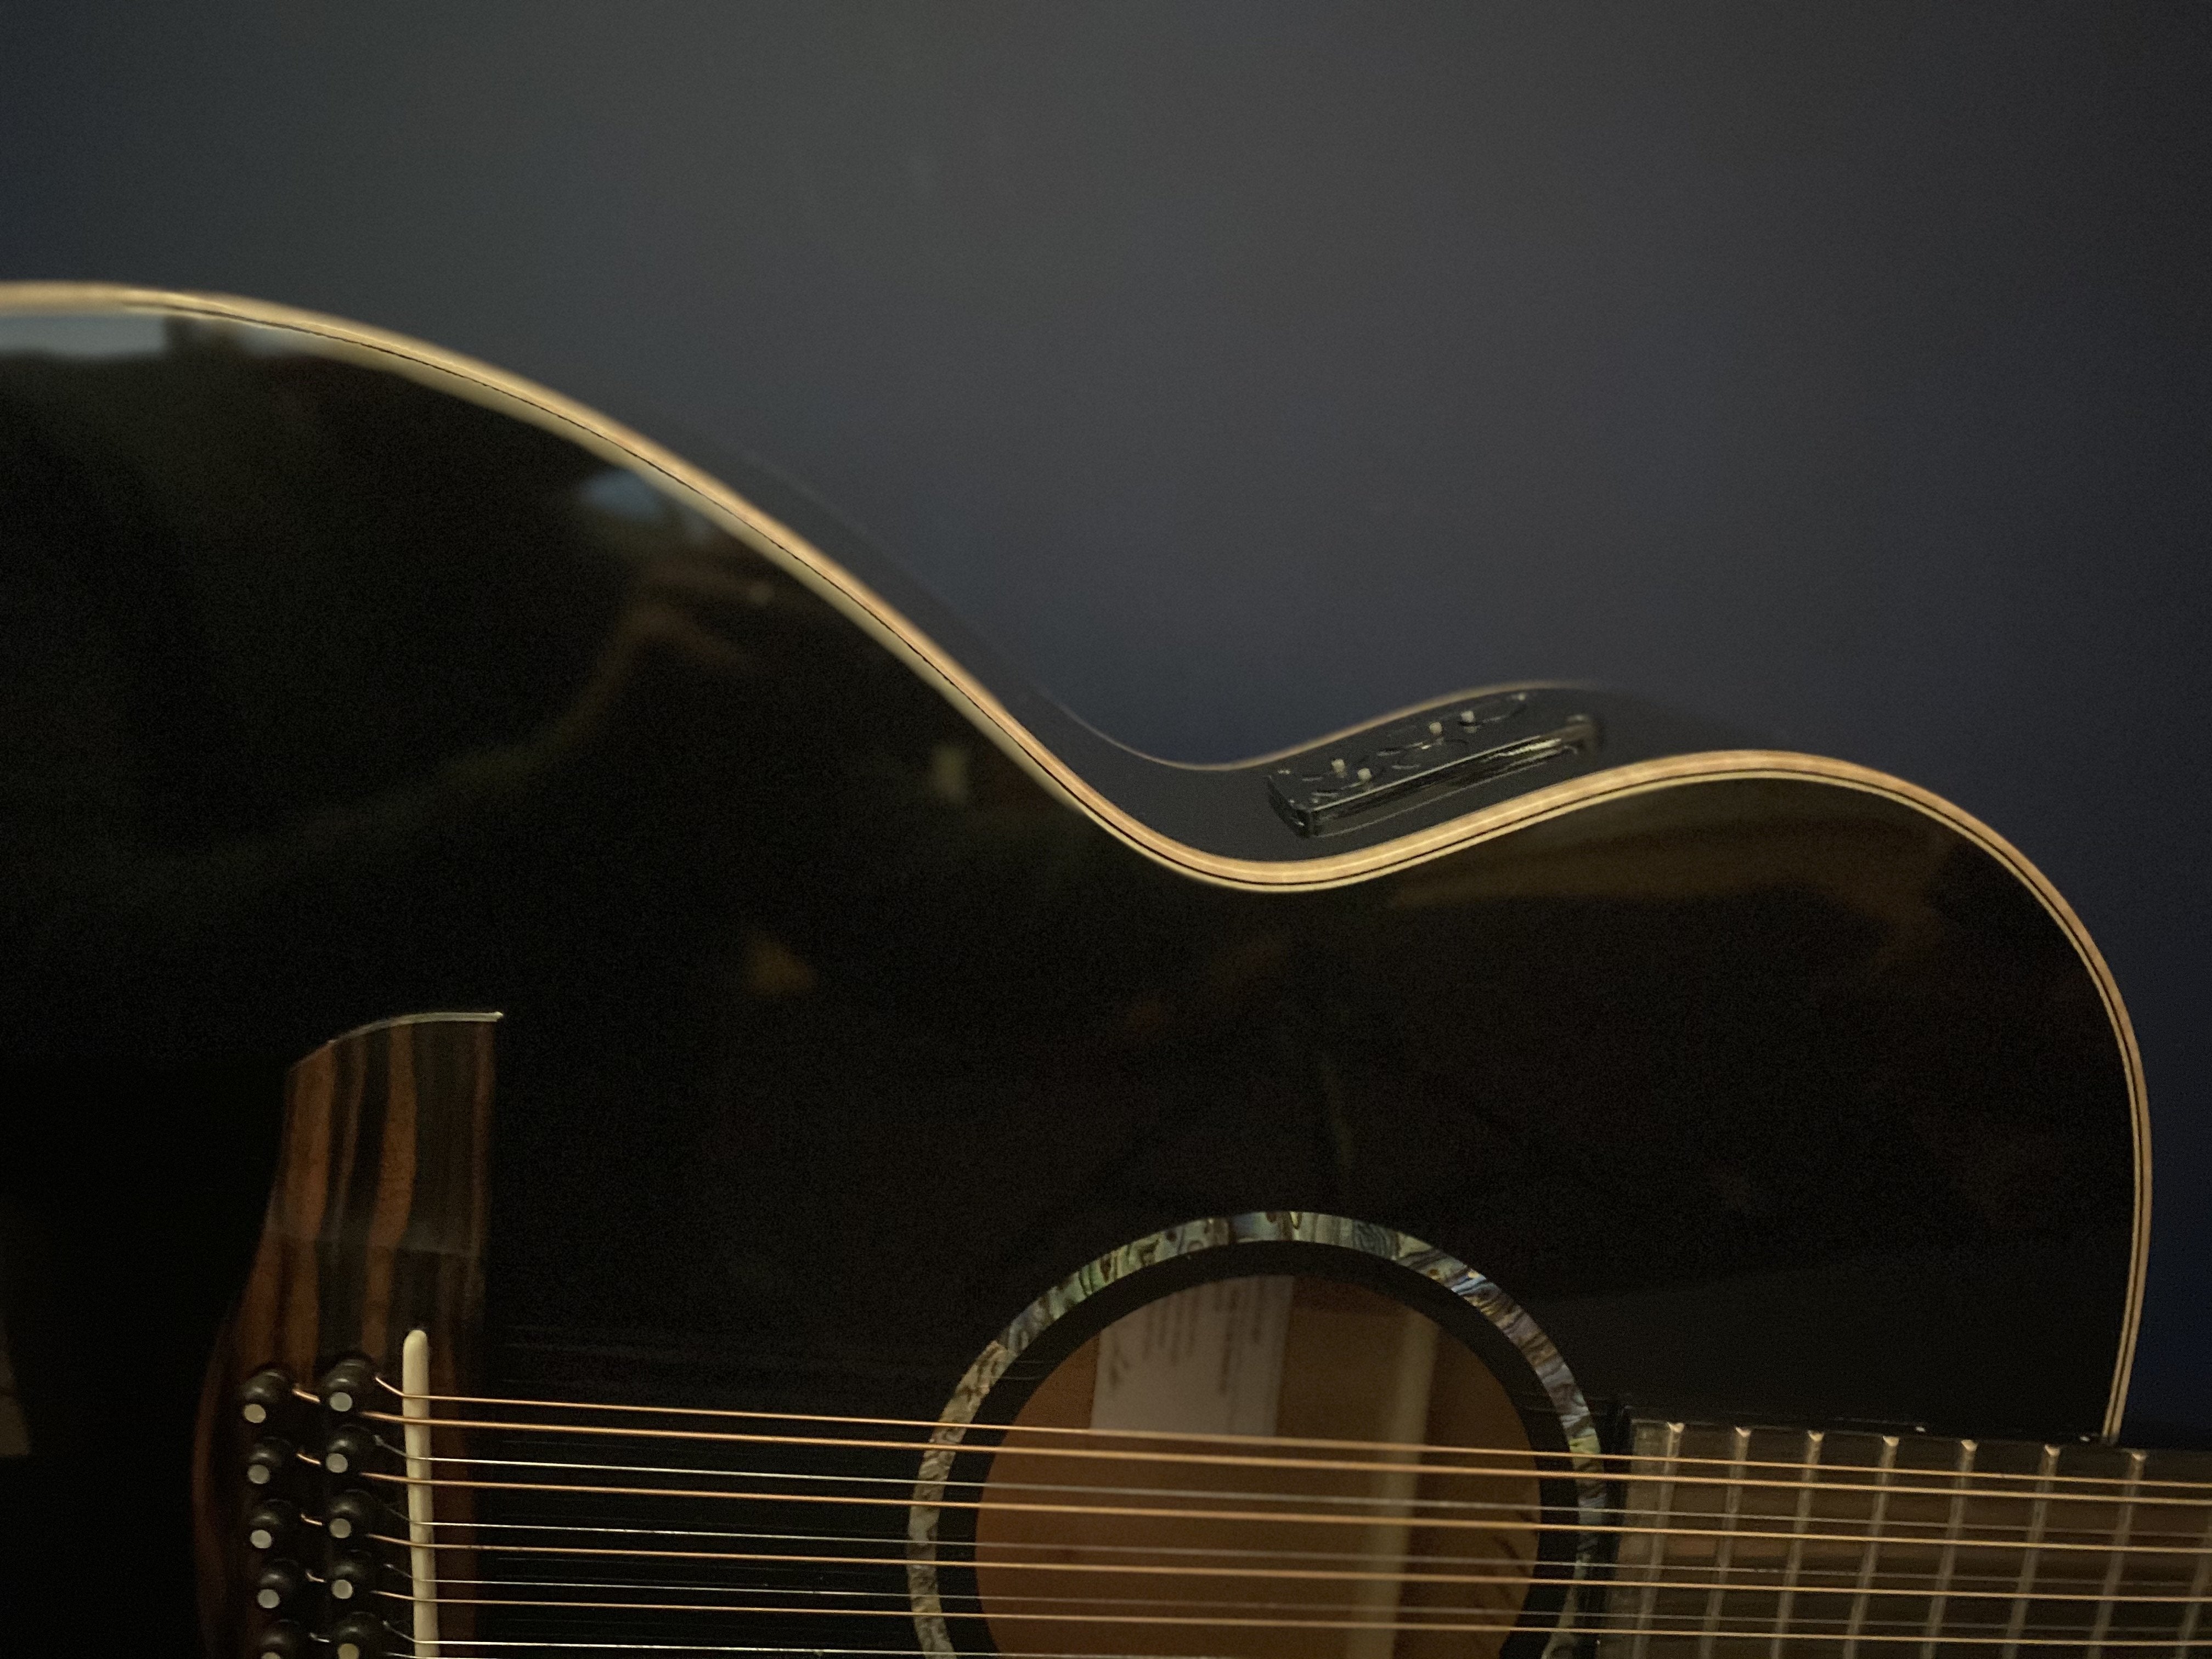 Faith FECV12 Electro Acoustic Guitar (Eclipse Venus12), Electro Acoustic Guitar for sale at Richards Guitars.